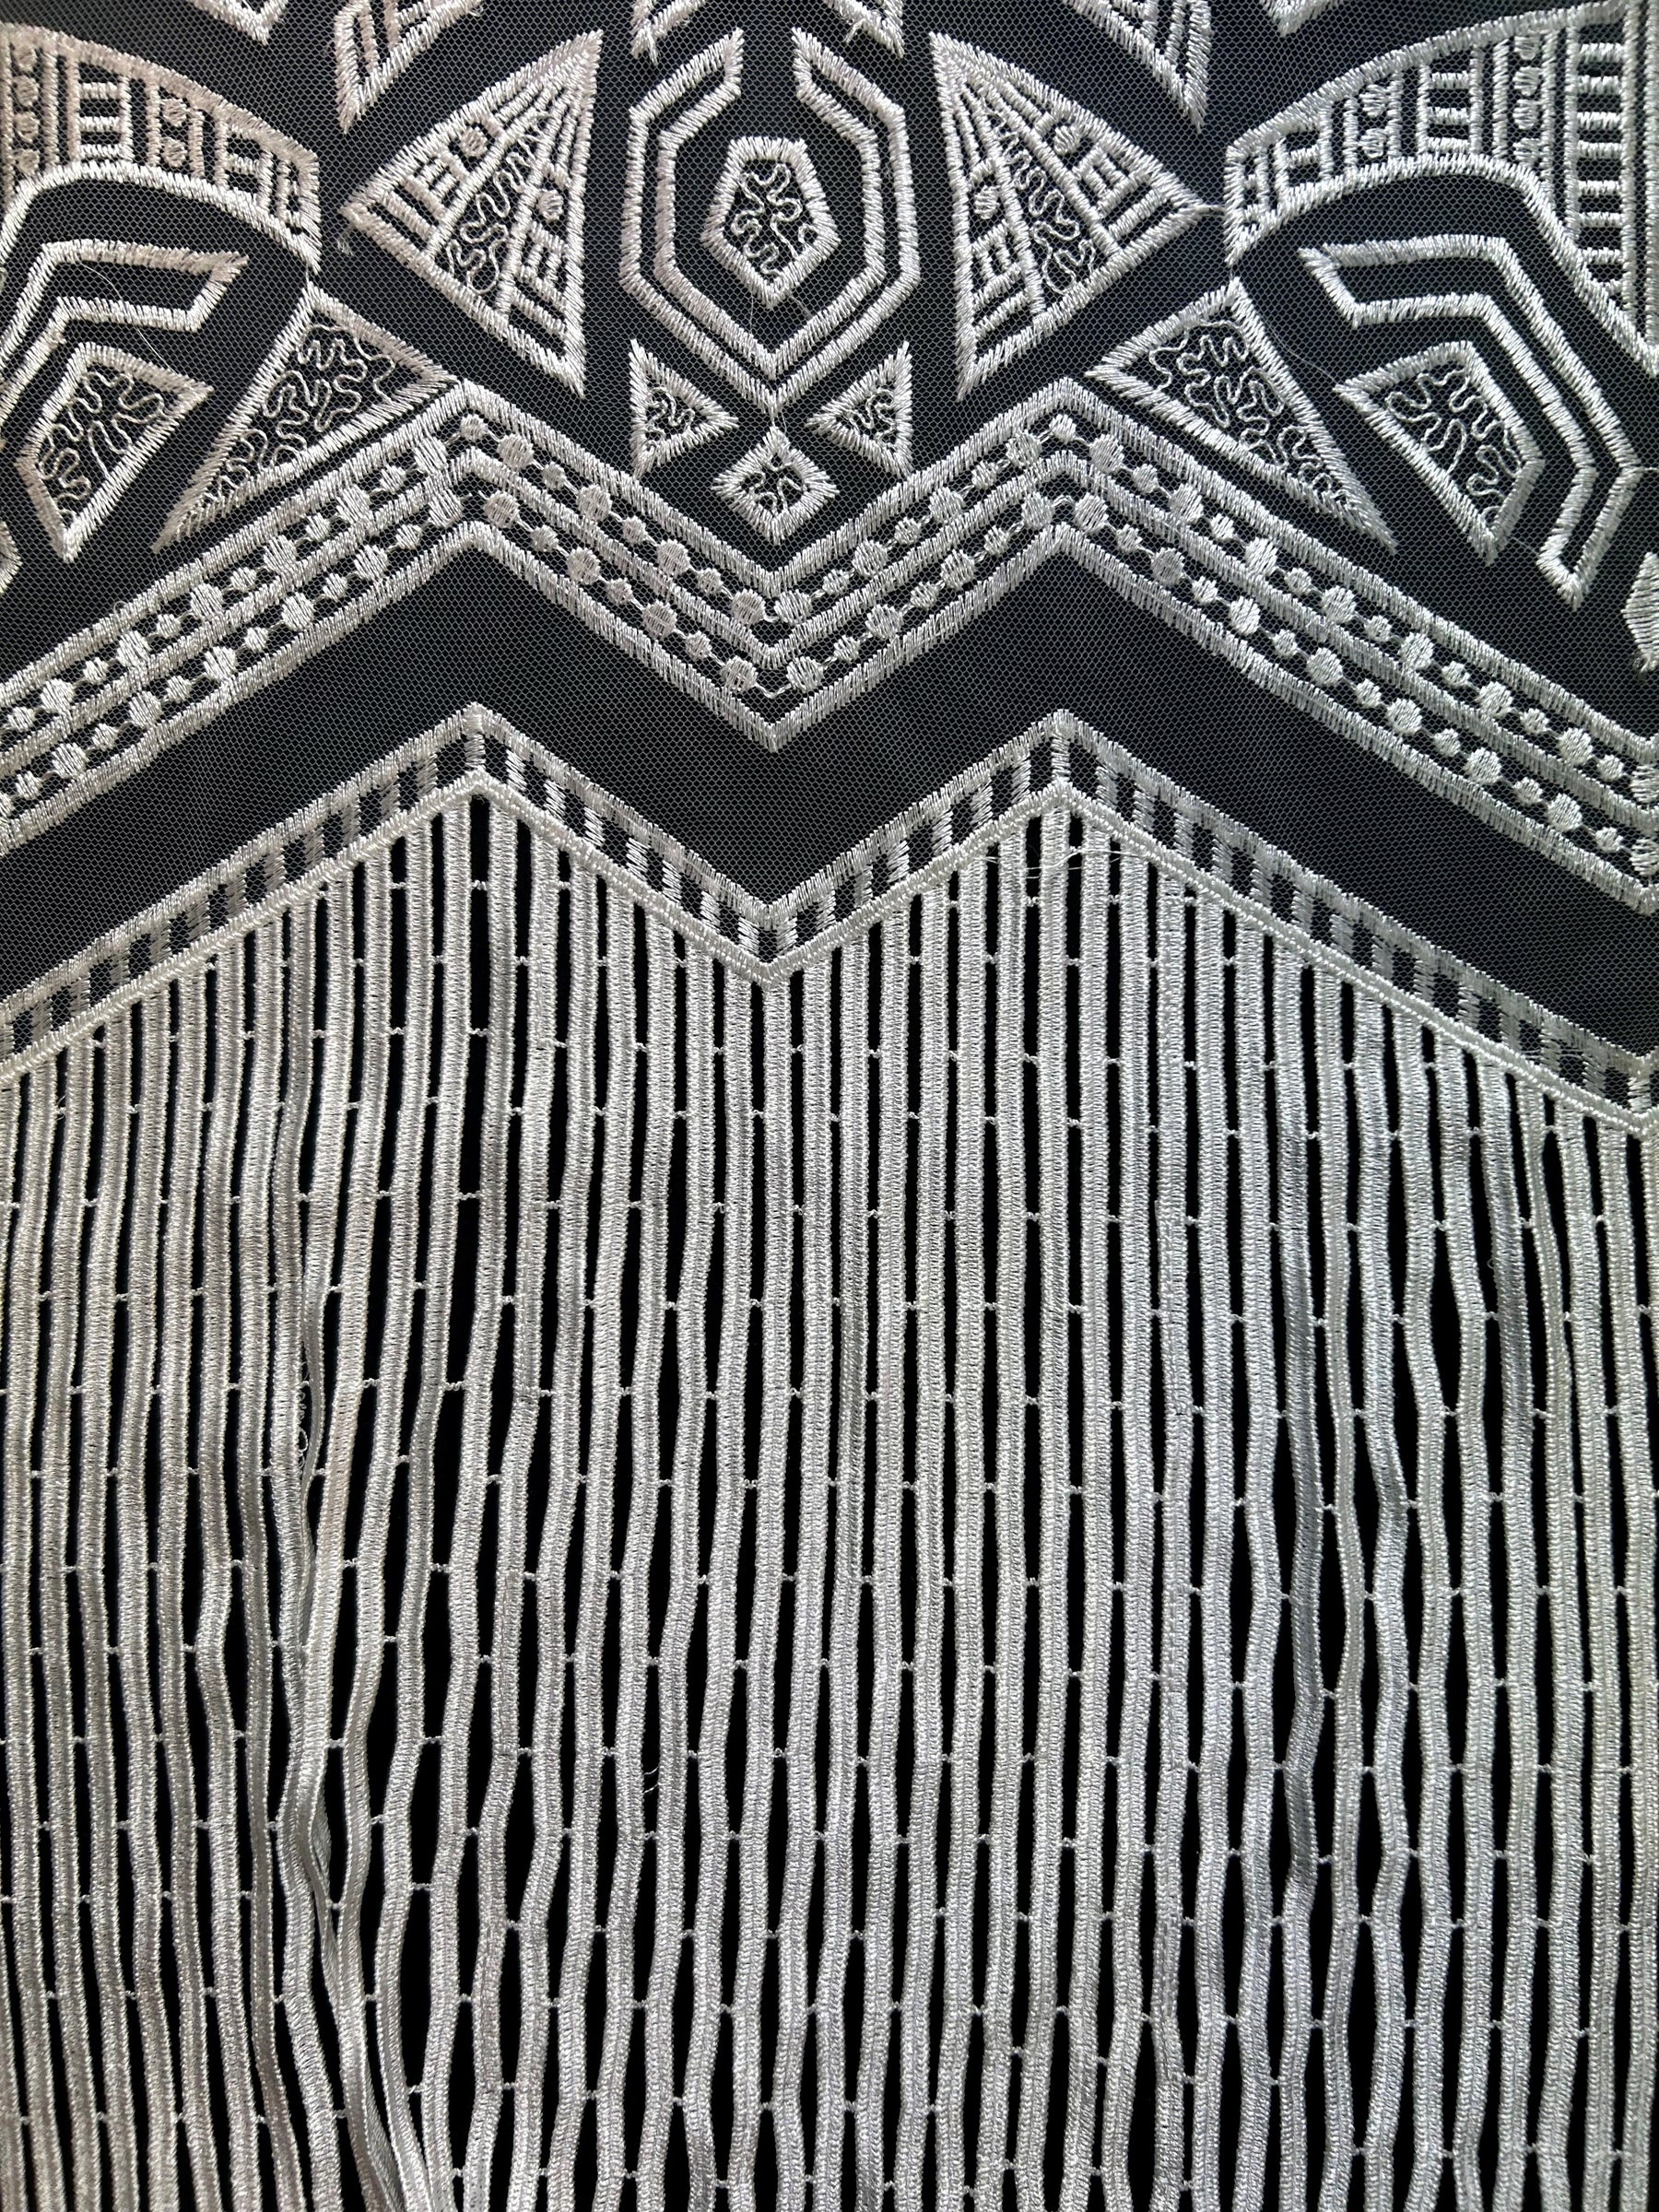 Ivory Fringed Embroidery Lace - Essence